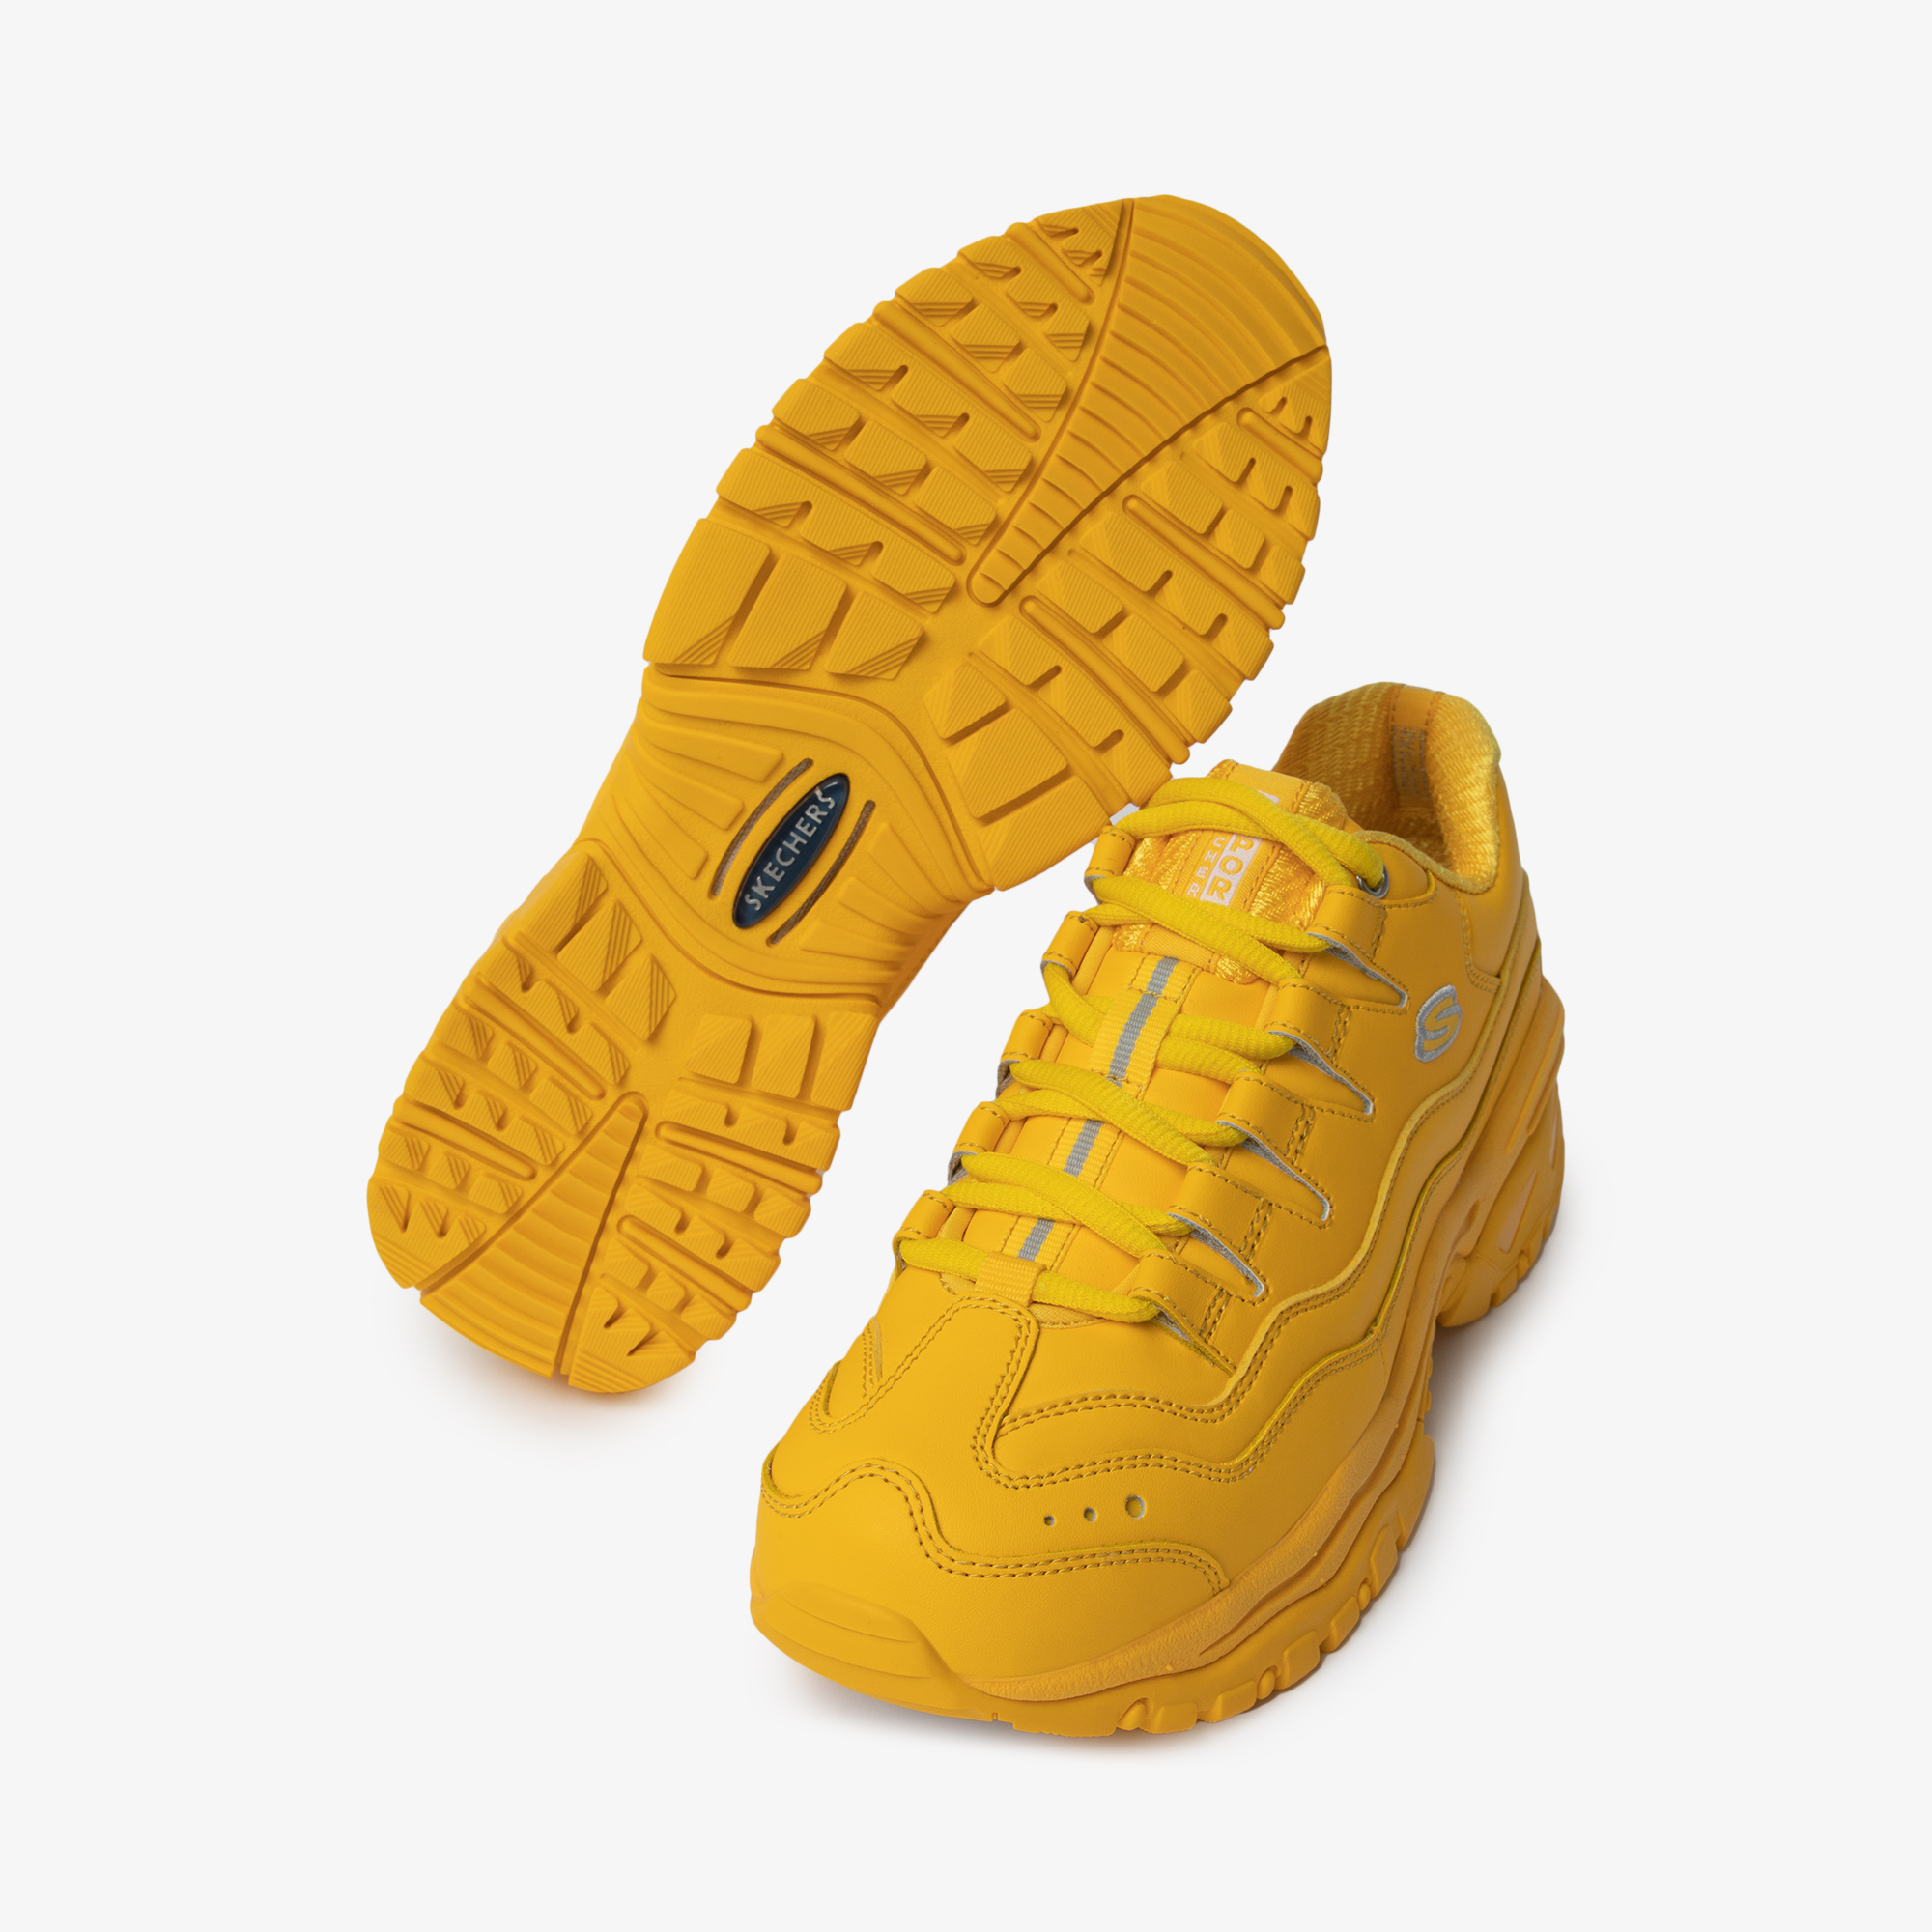 Кроссовки желтого цвета. Skechers кроссовки женские желтые. Кроссовки Skechers Energy желтые. Скетчерс кроссовки женские желтые. Skechers кроссовки Energy фуксия.